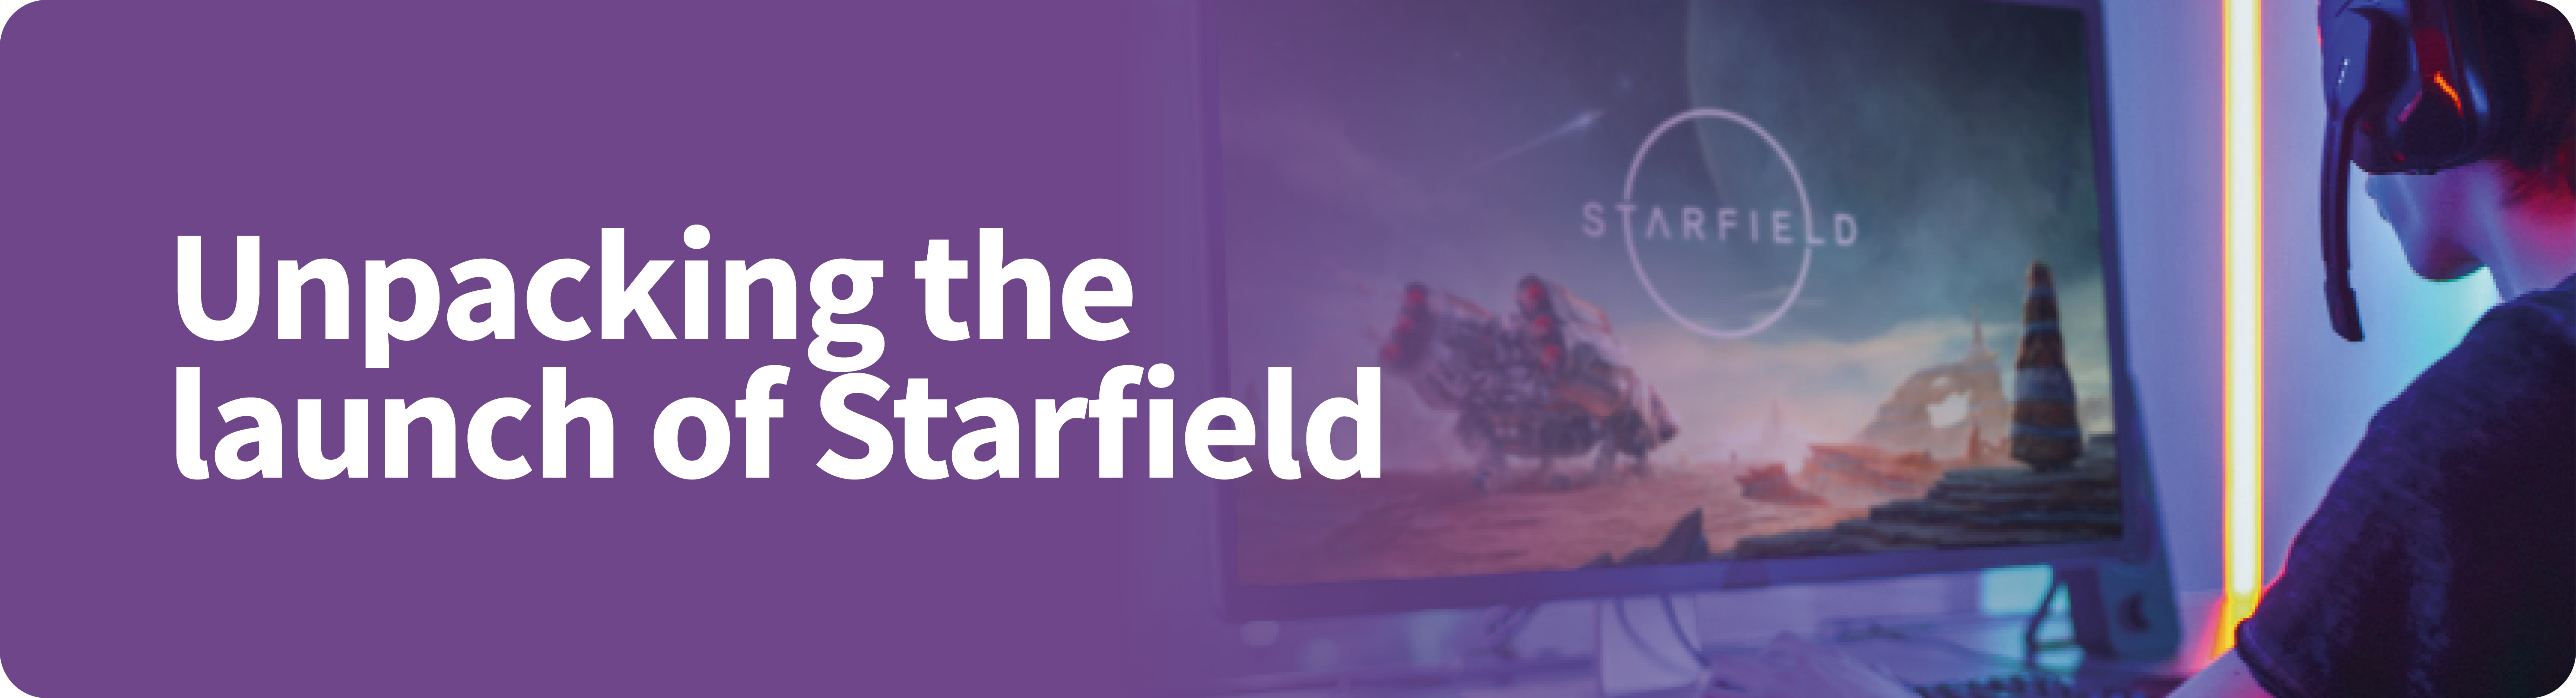 Starfield landing page header